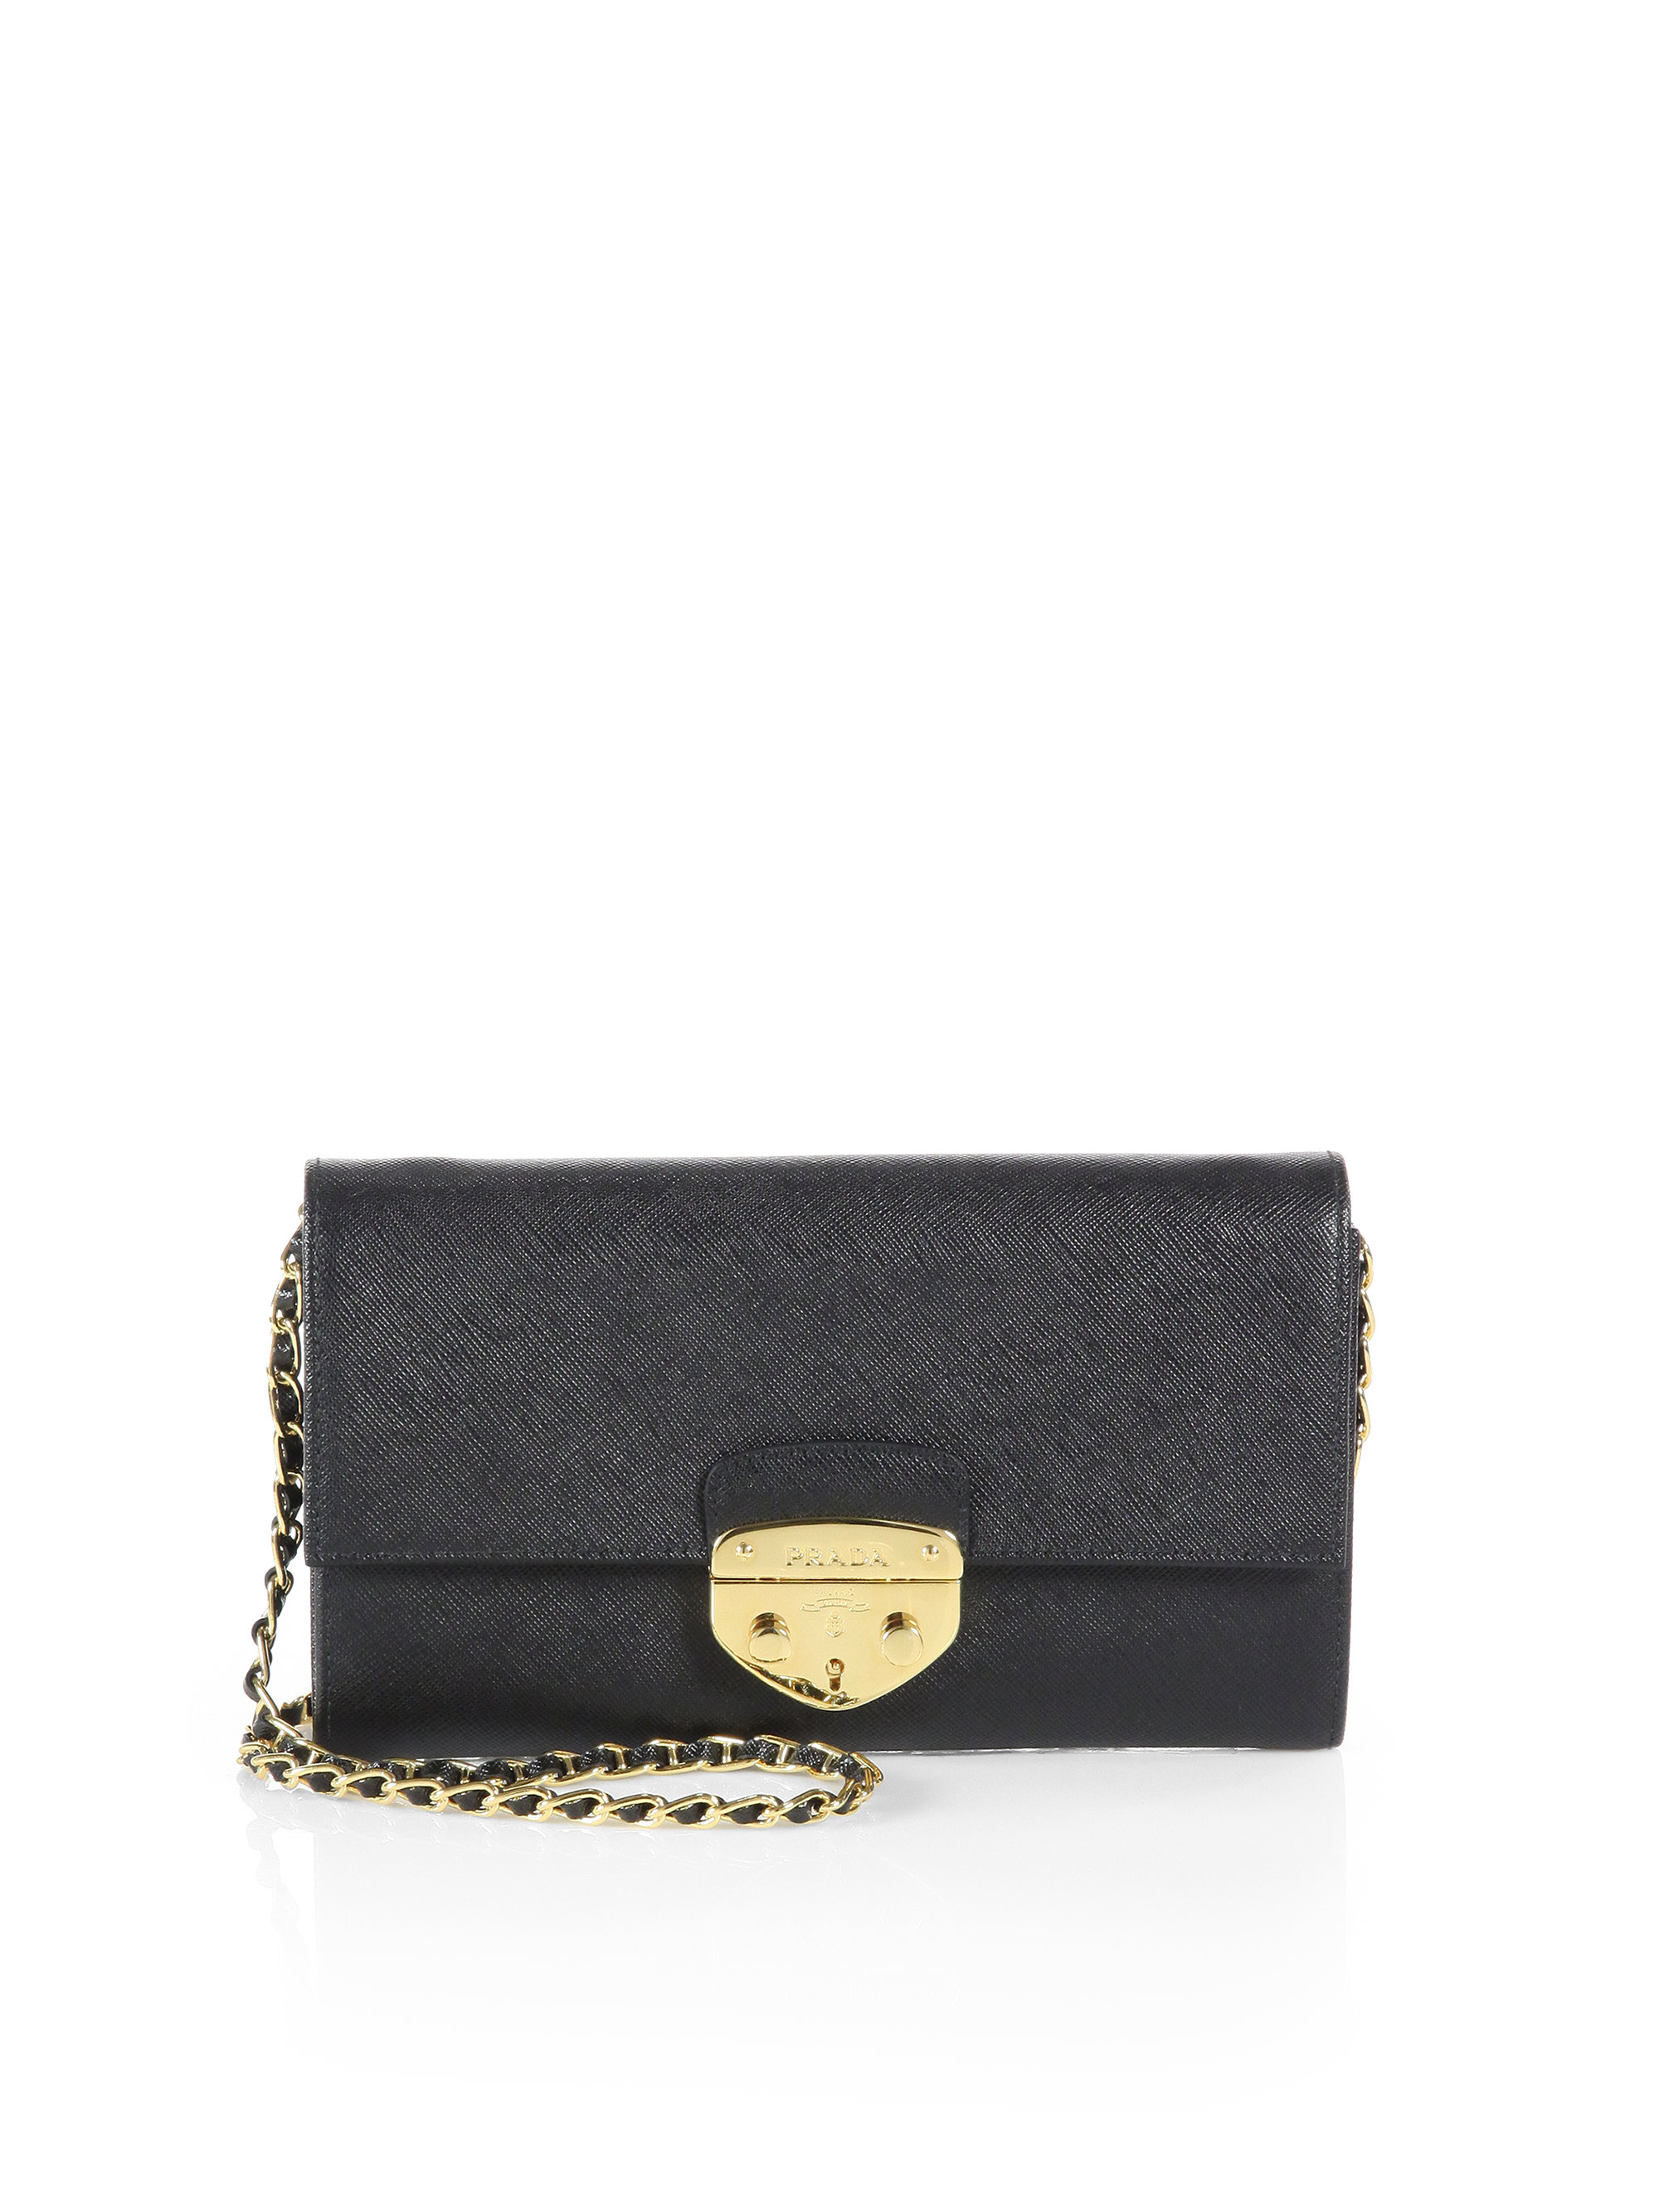 how much prada bag cost - Prada Saffiano Lux Convertible Chain Wallet in Black | Lyst